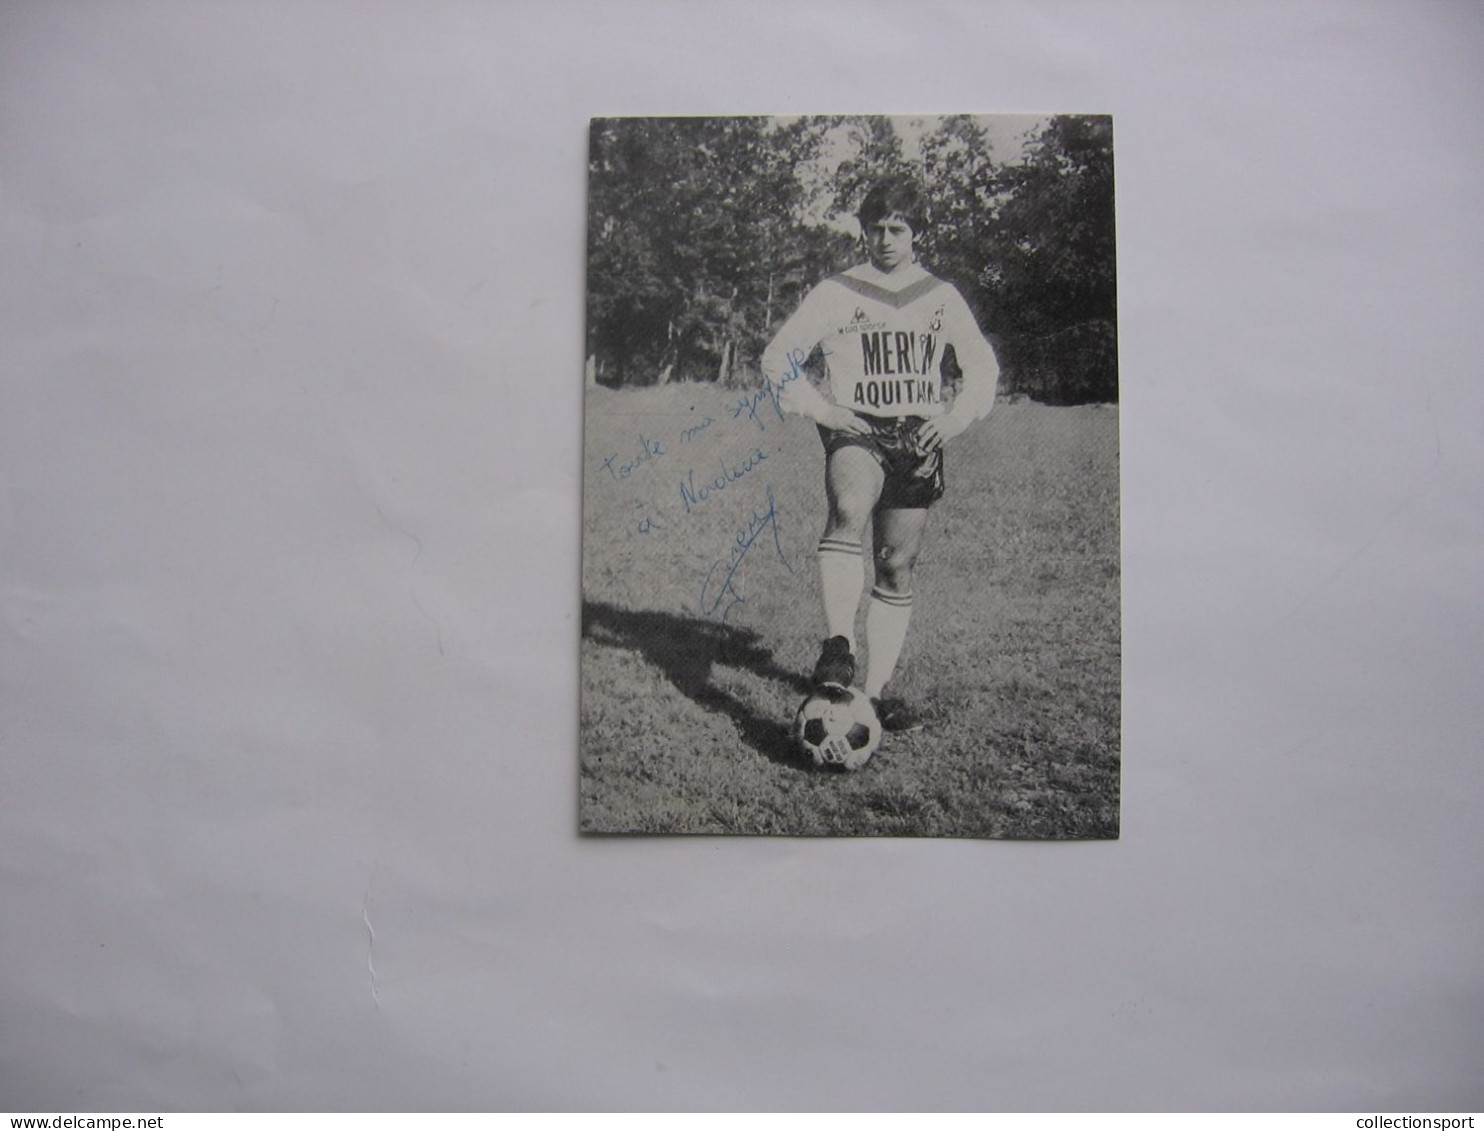 Football -  Autographe - Carte Signée Alain Giresse - Handtekening